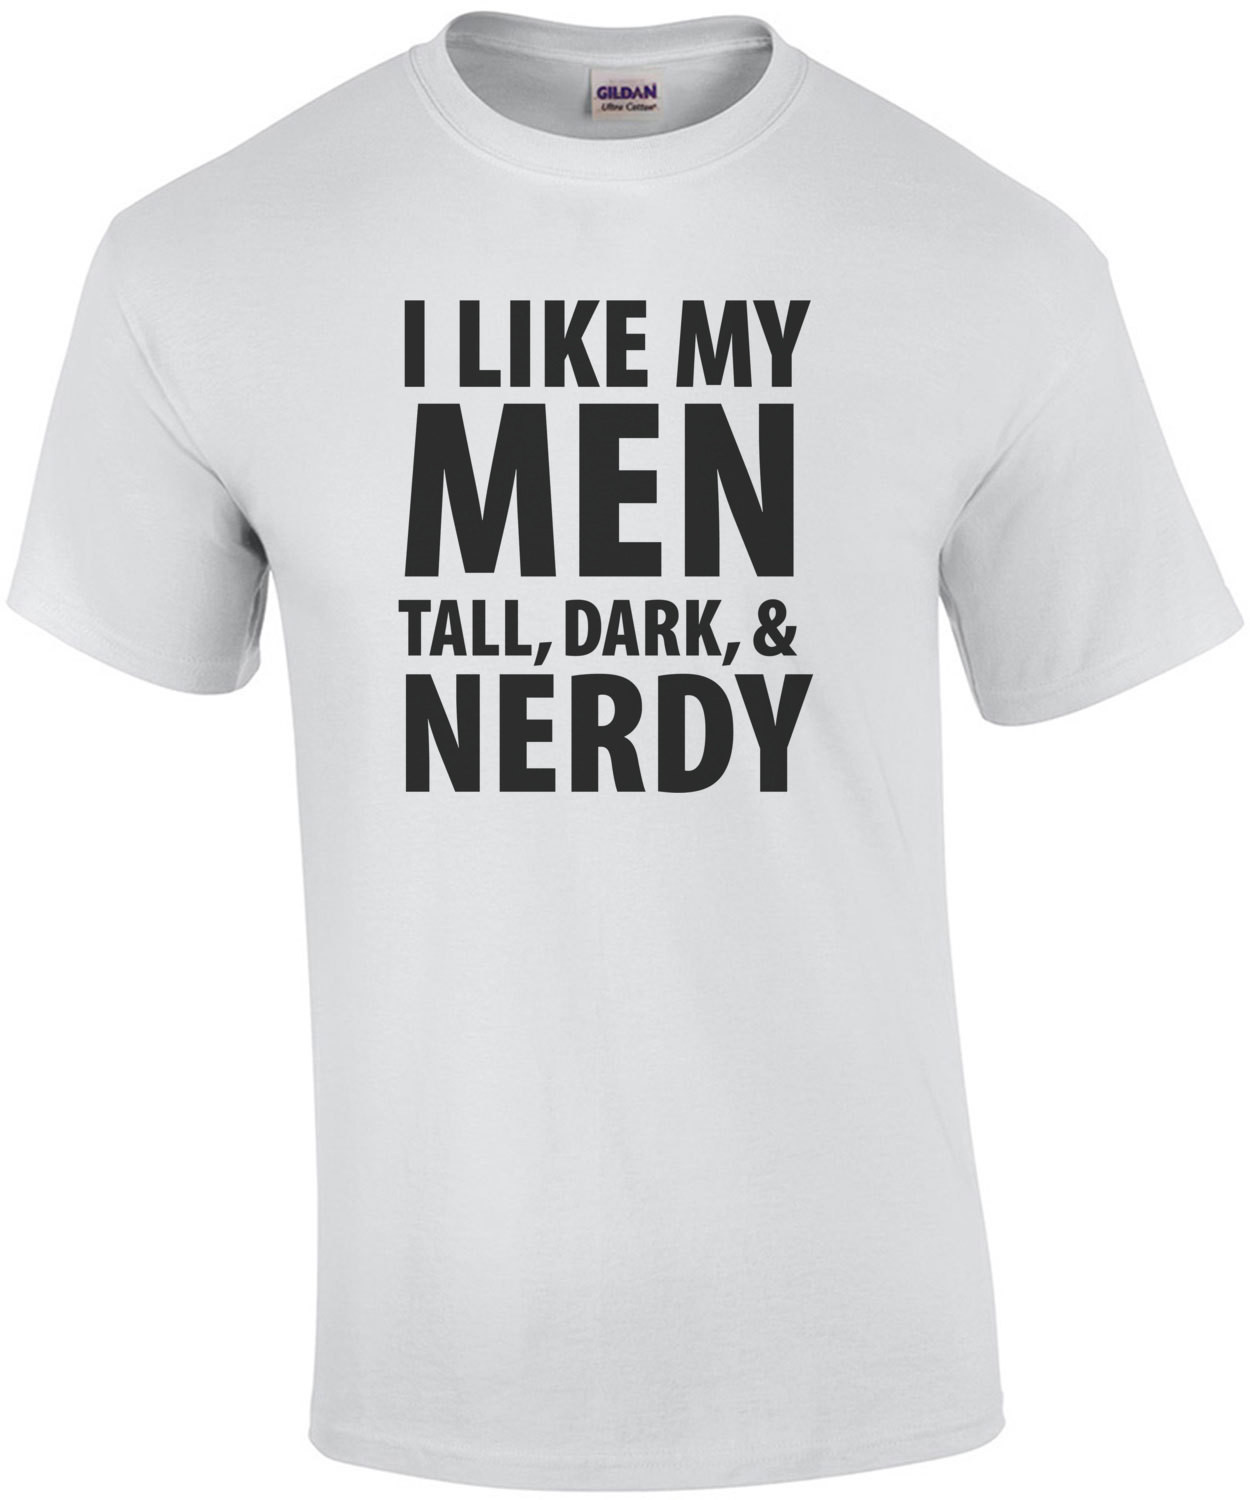 I like my men tall, dark, & nerdy - funny t-shirt